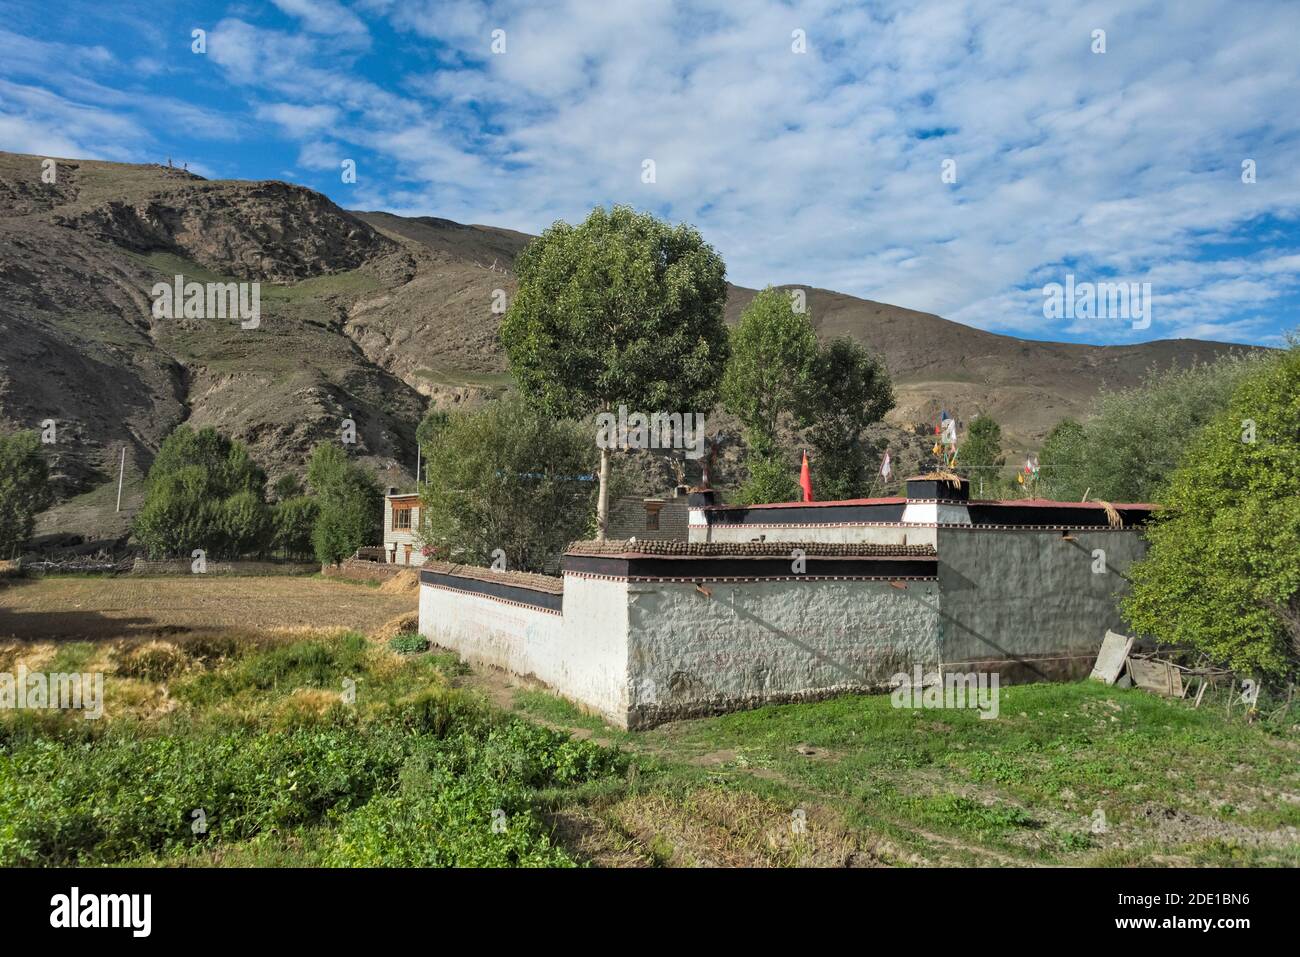 Tibetan farmer's house in the Himalayas, Shigatse Prefecture, Tibet, China Stock Photo